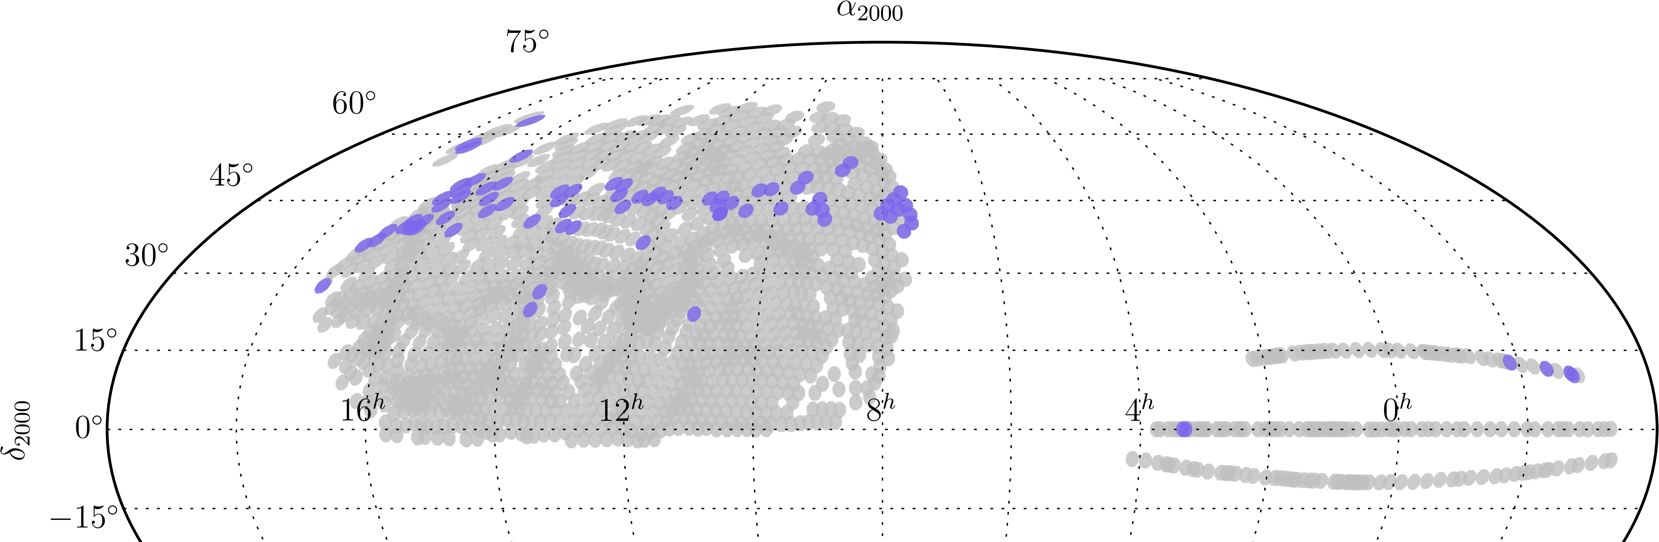 DR13 MaNGA spectroscopic coverage in Equatorial coordinates.